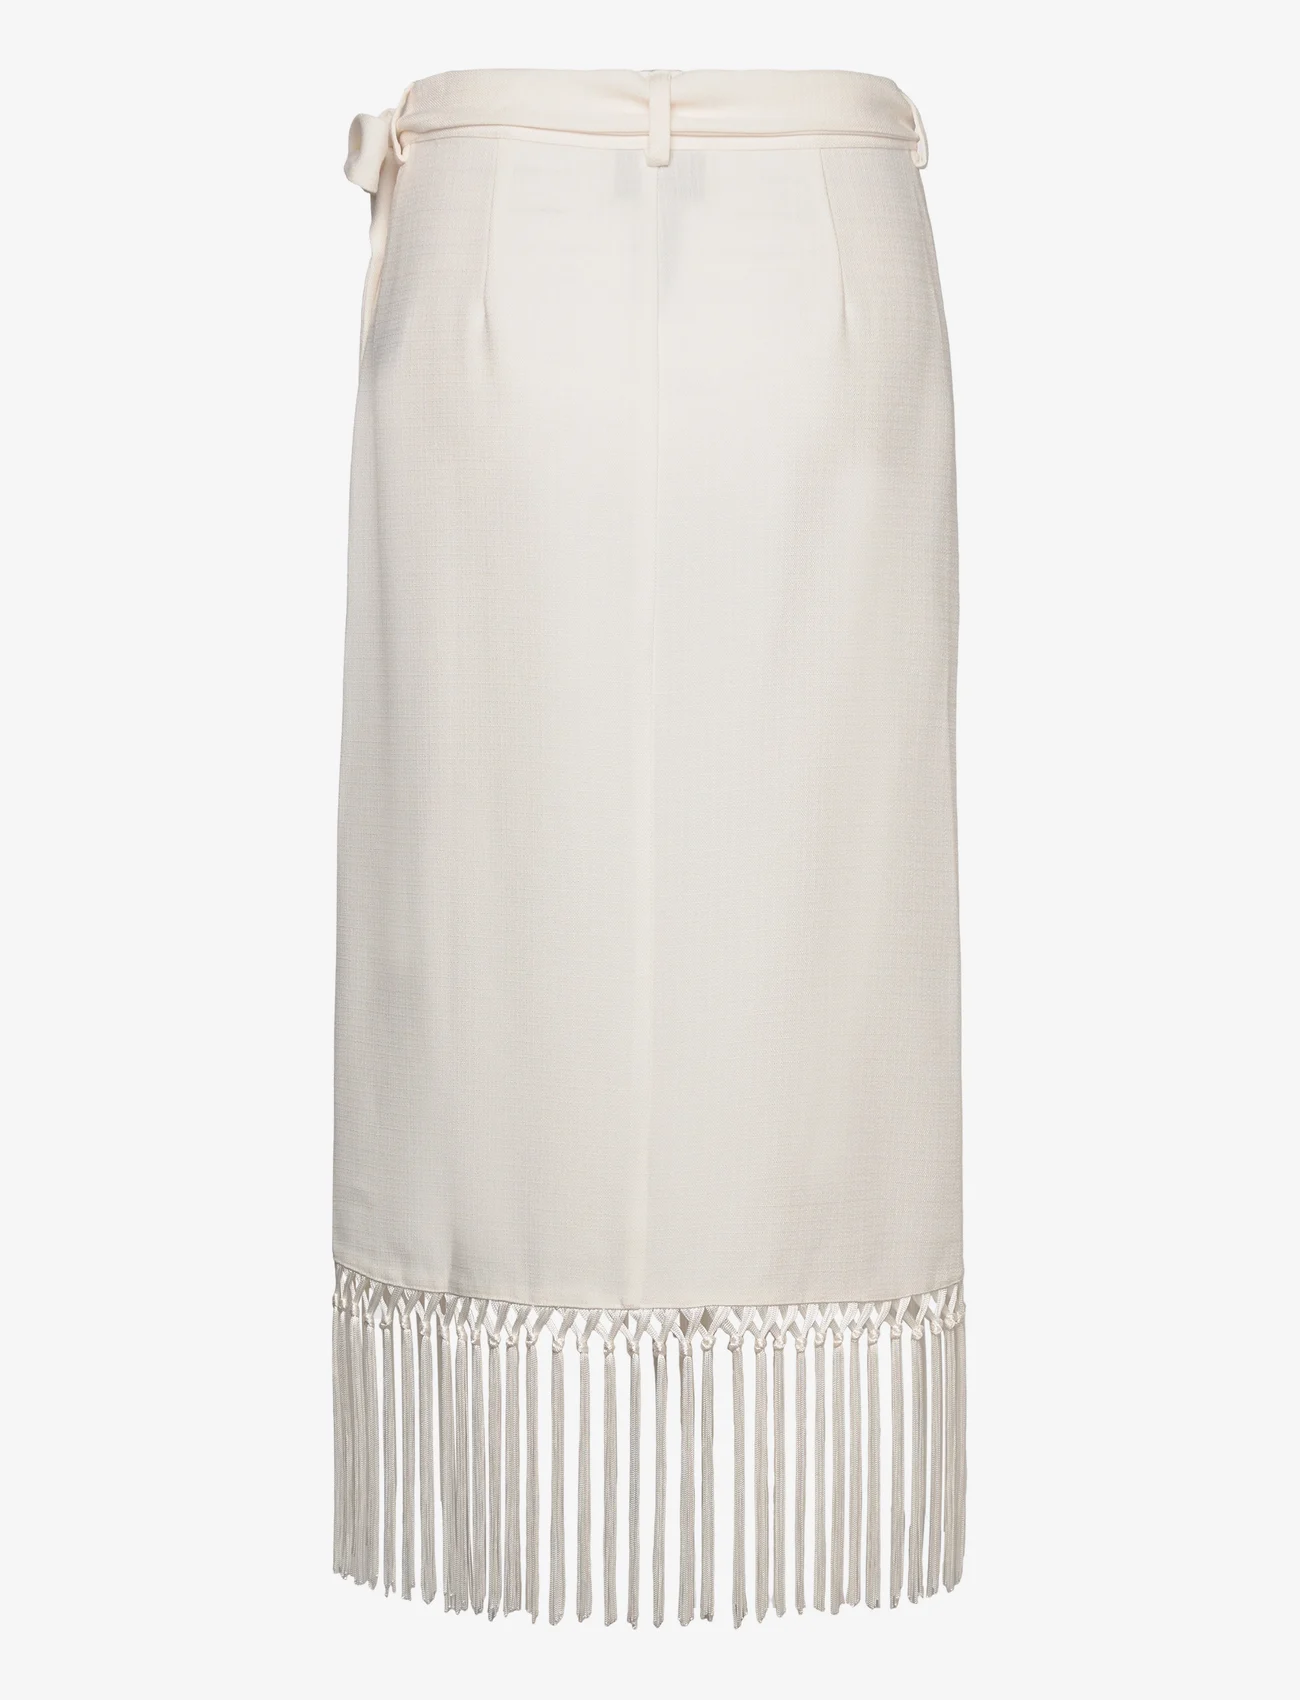 MAUD - Ellie Skirt - feestelijke kleding voor outlet-prijzen - off white - 1